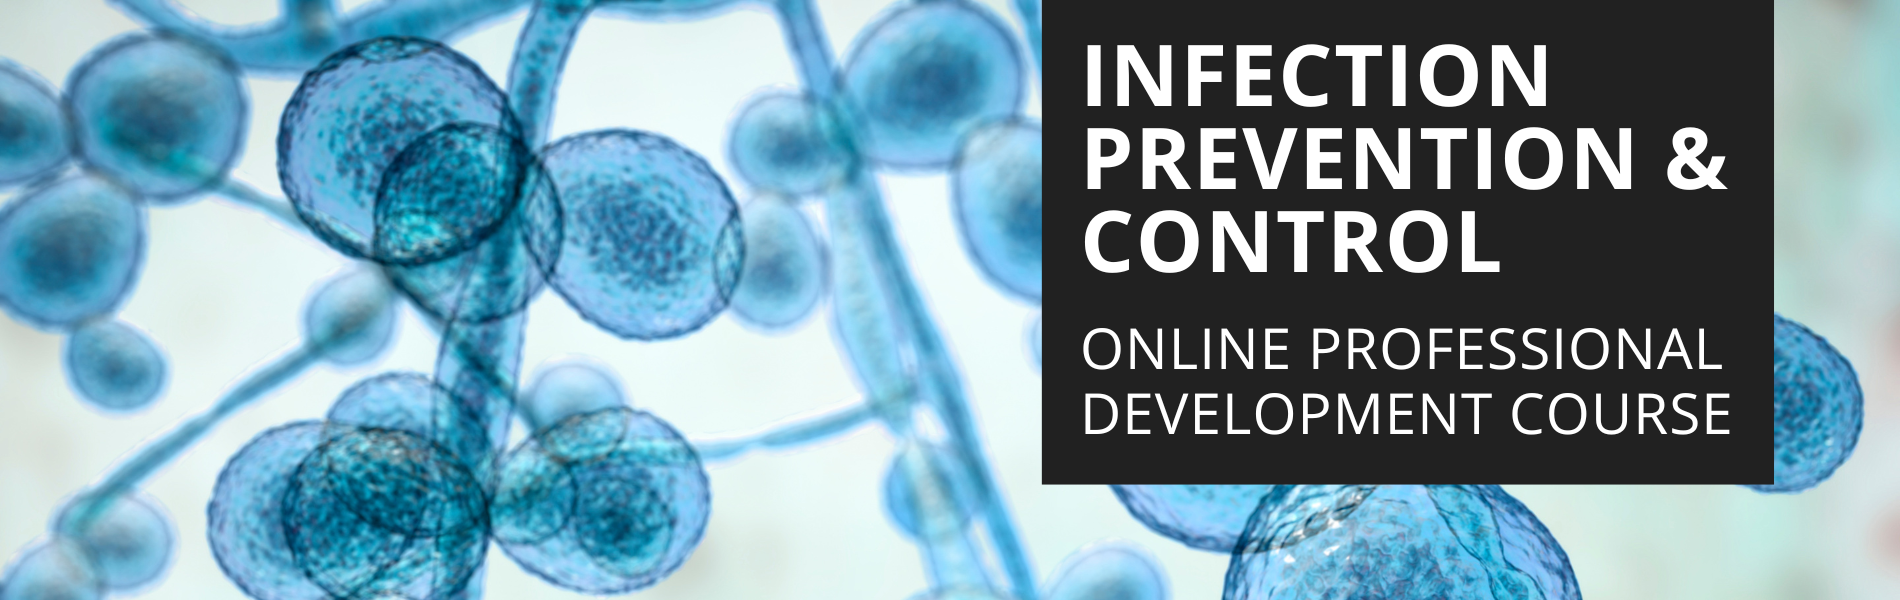 Infection Prevention & Control Online Professional Development Course